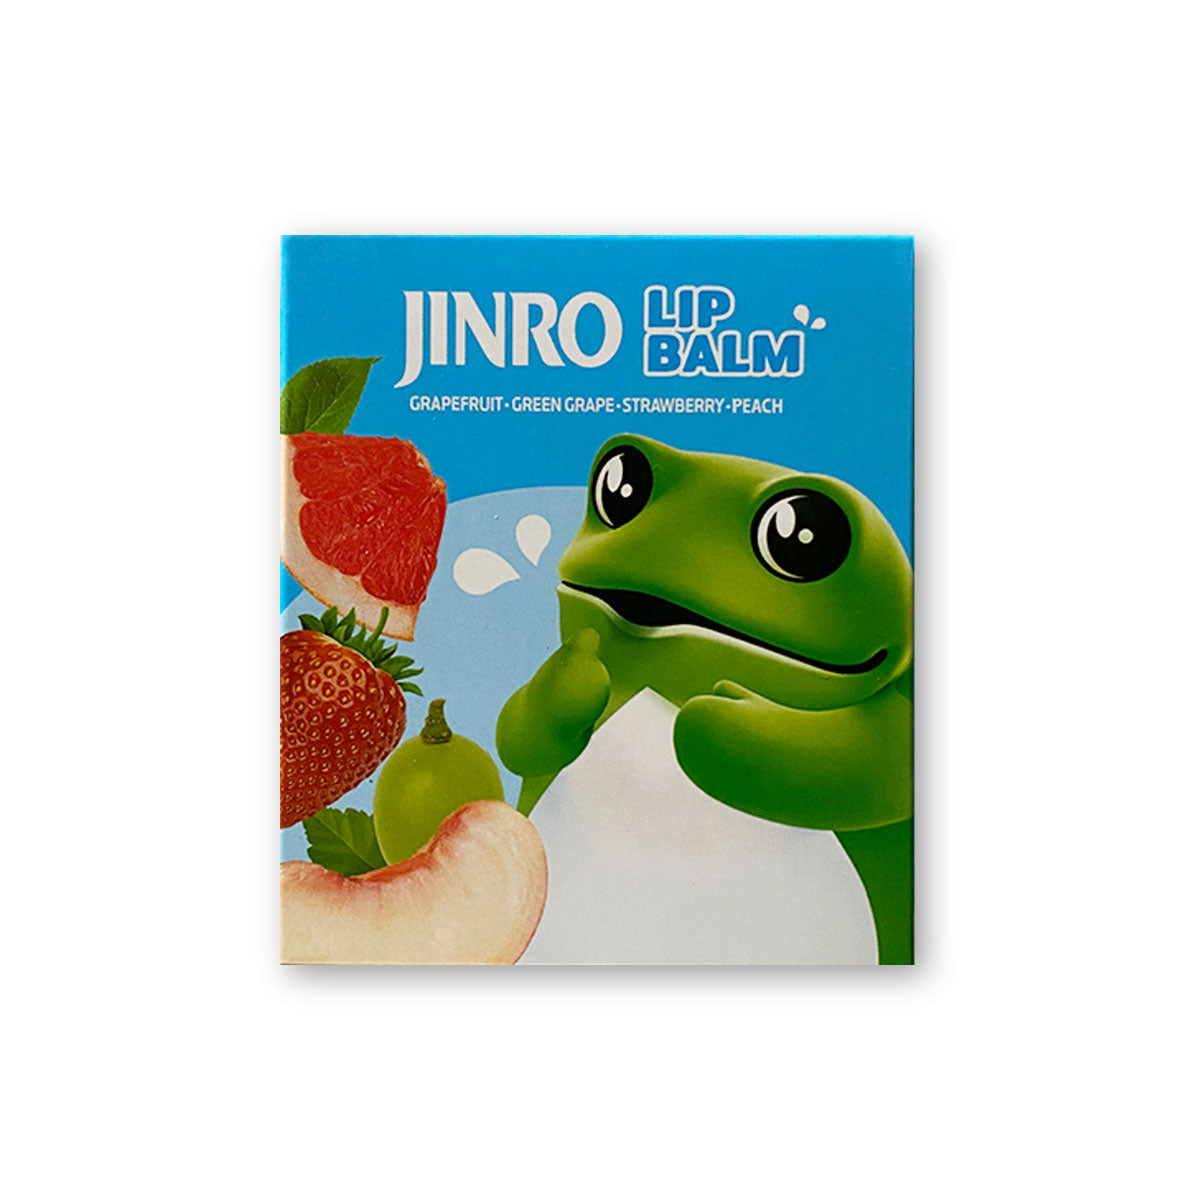 Jinro Lip Balm 4-Pack